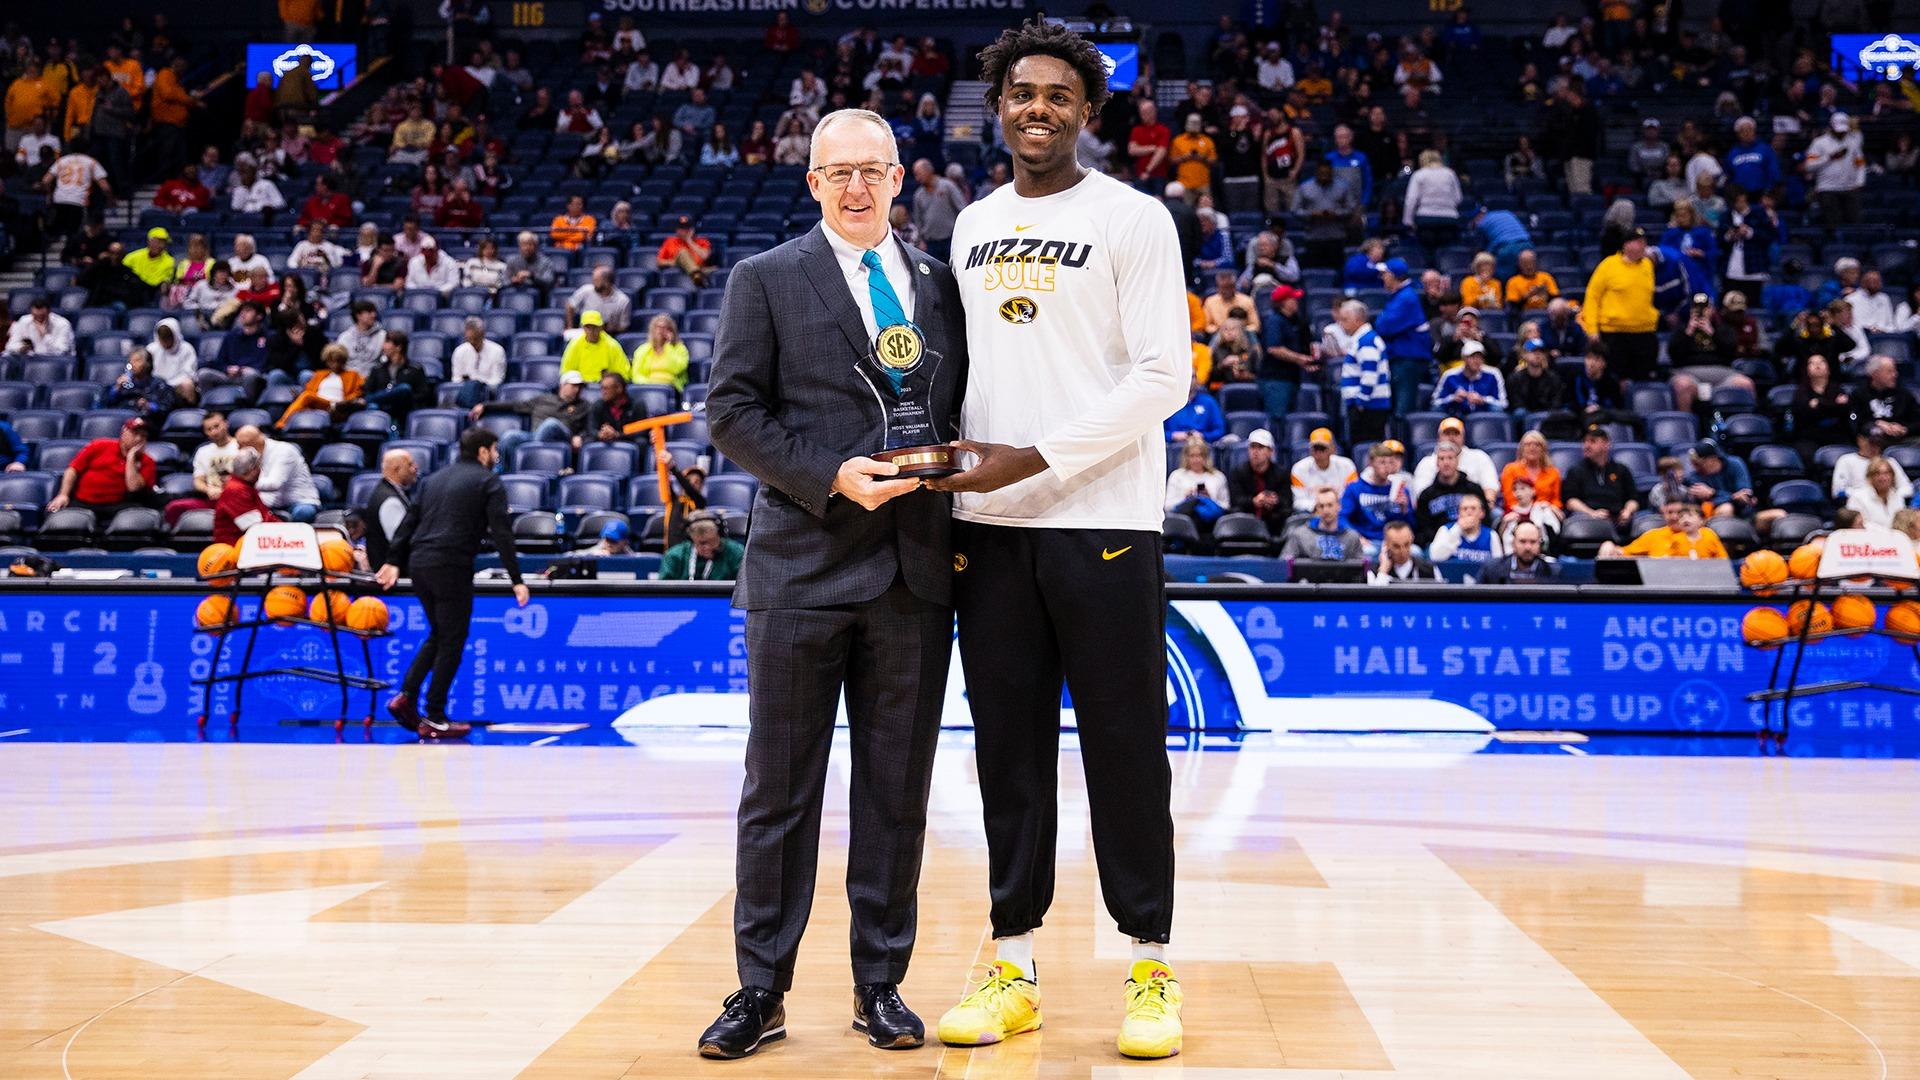 Kobe Brown, SEC Scholar-Athlete of the Year